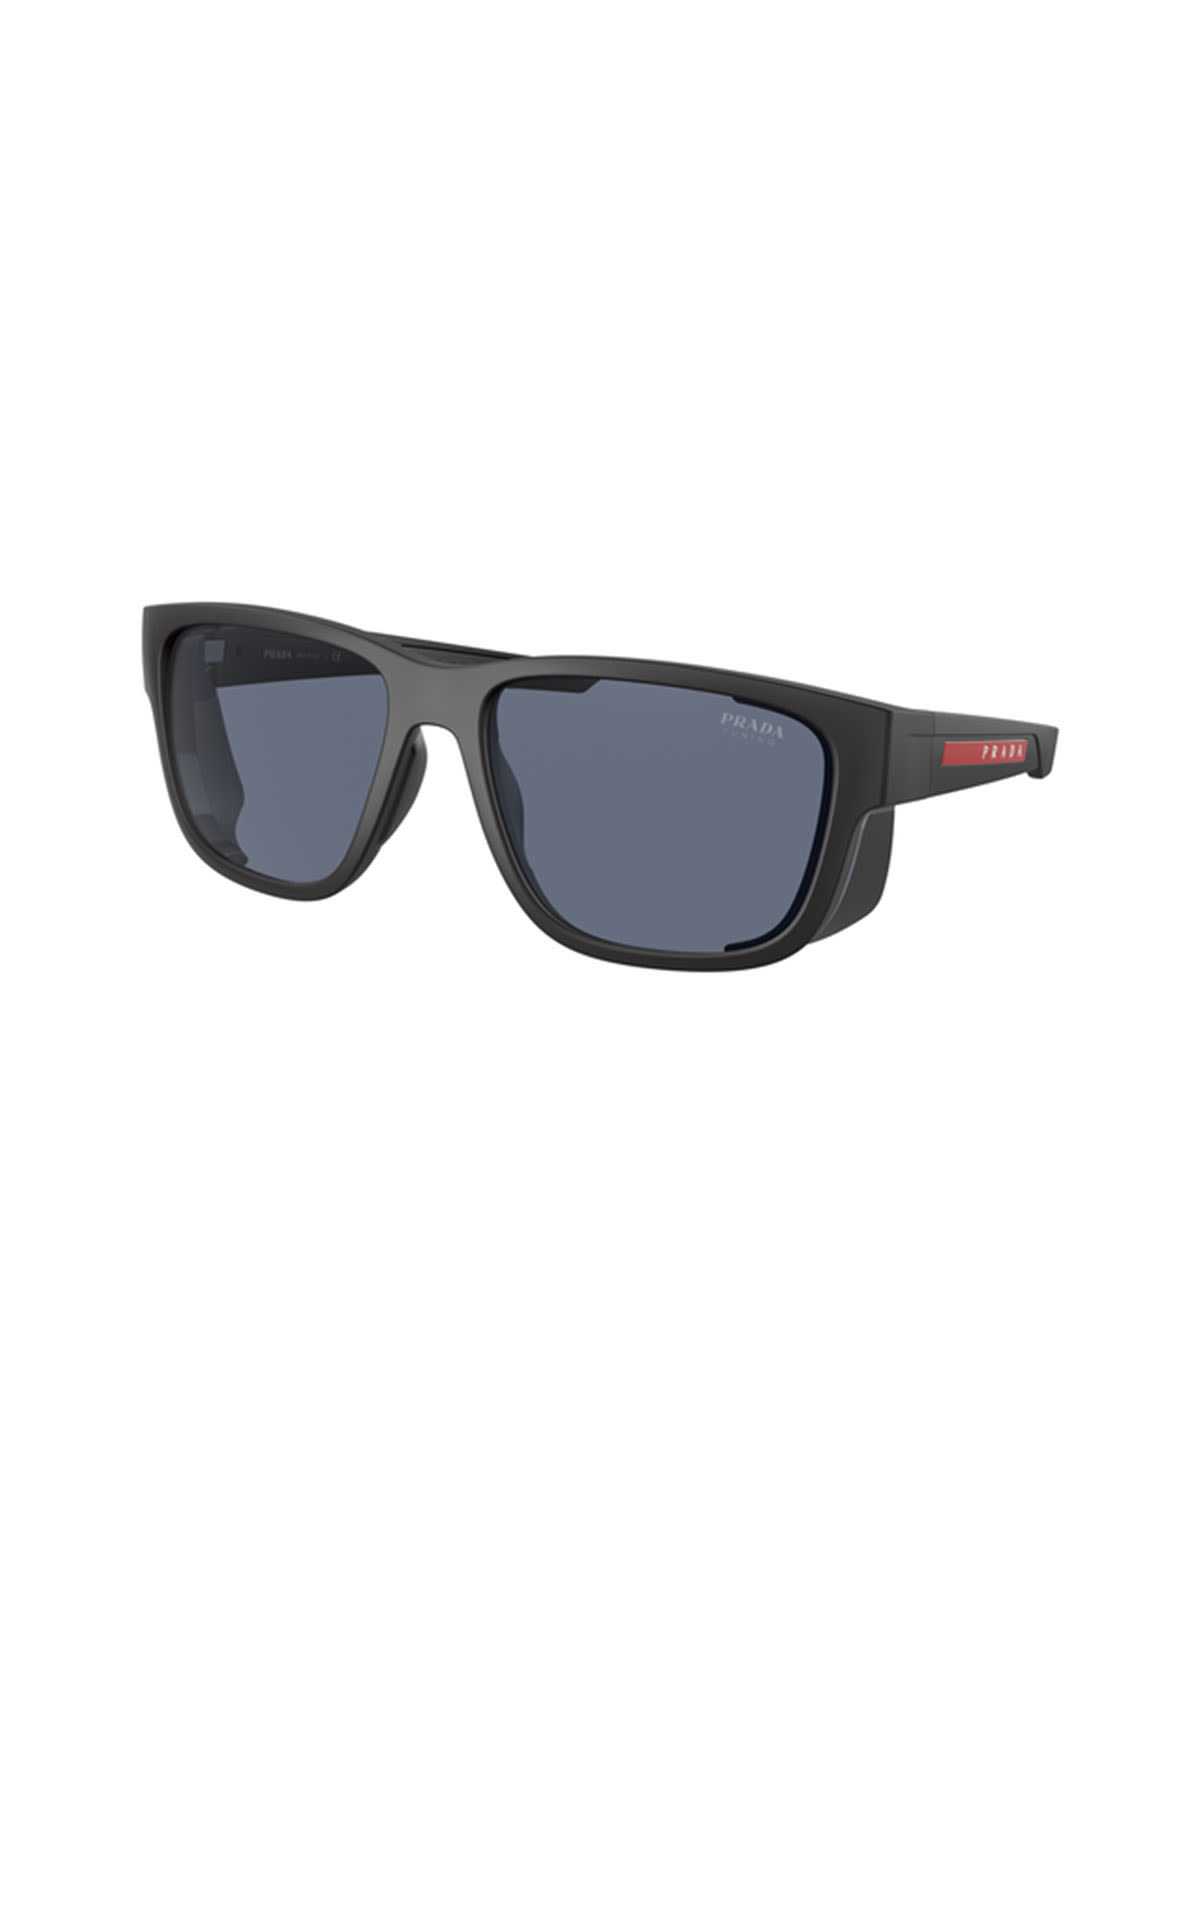 Black sunglasses for men Sunglass Hut